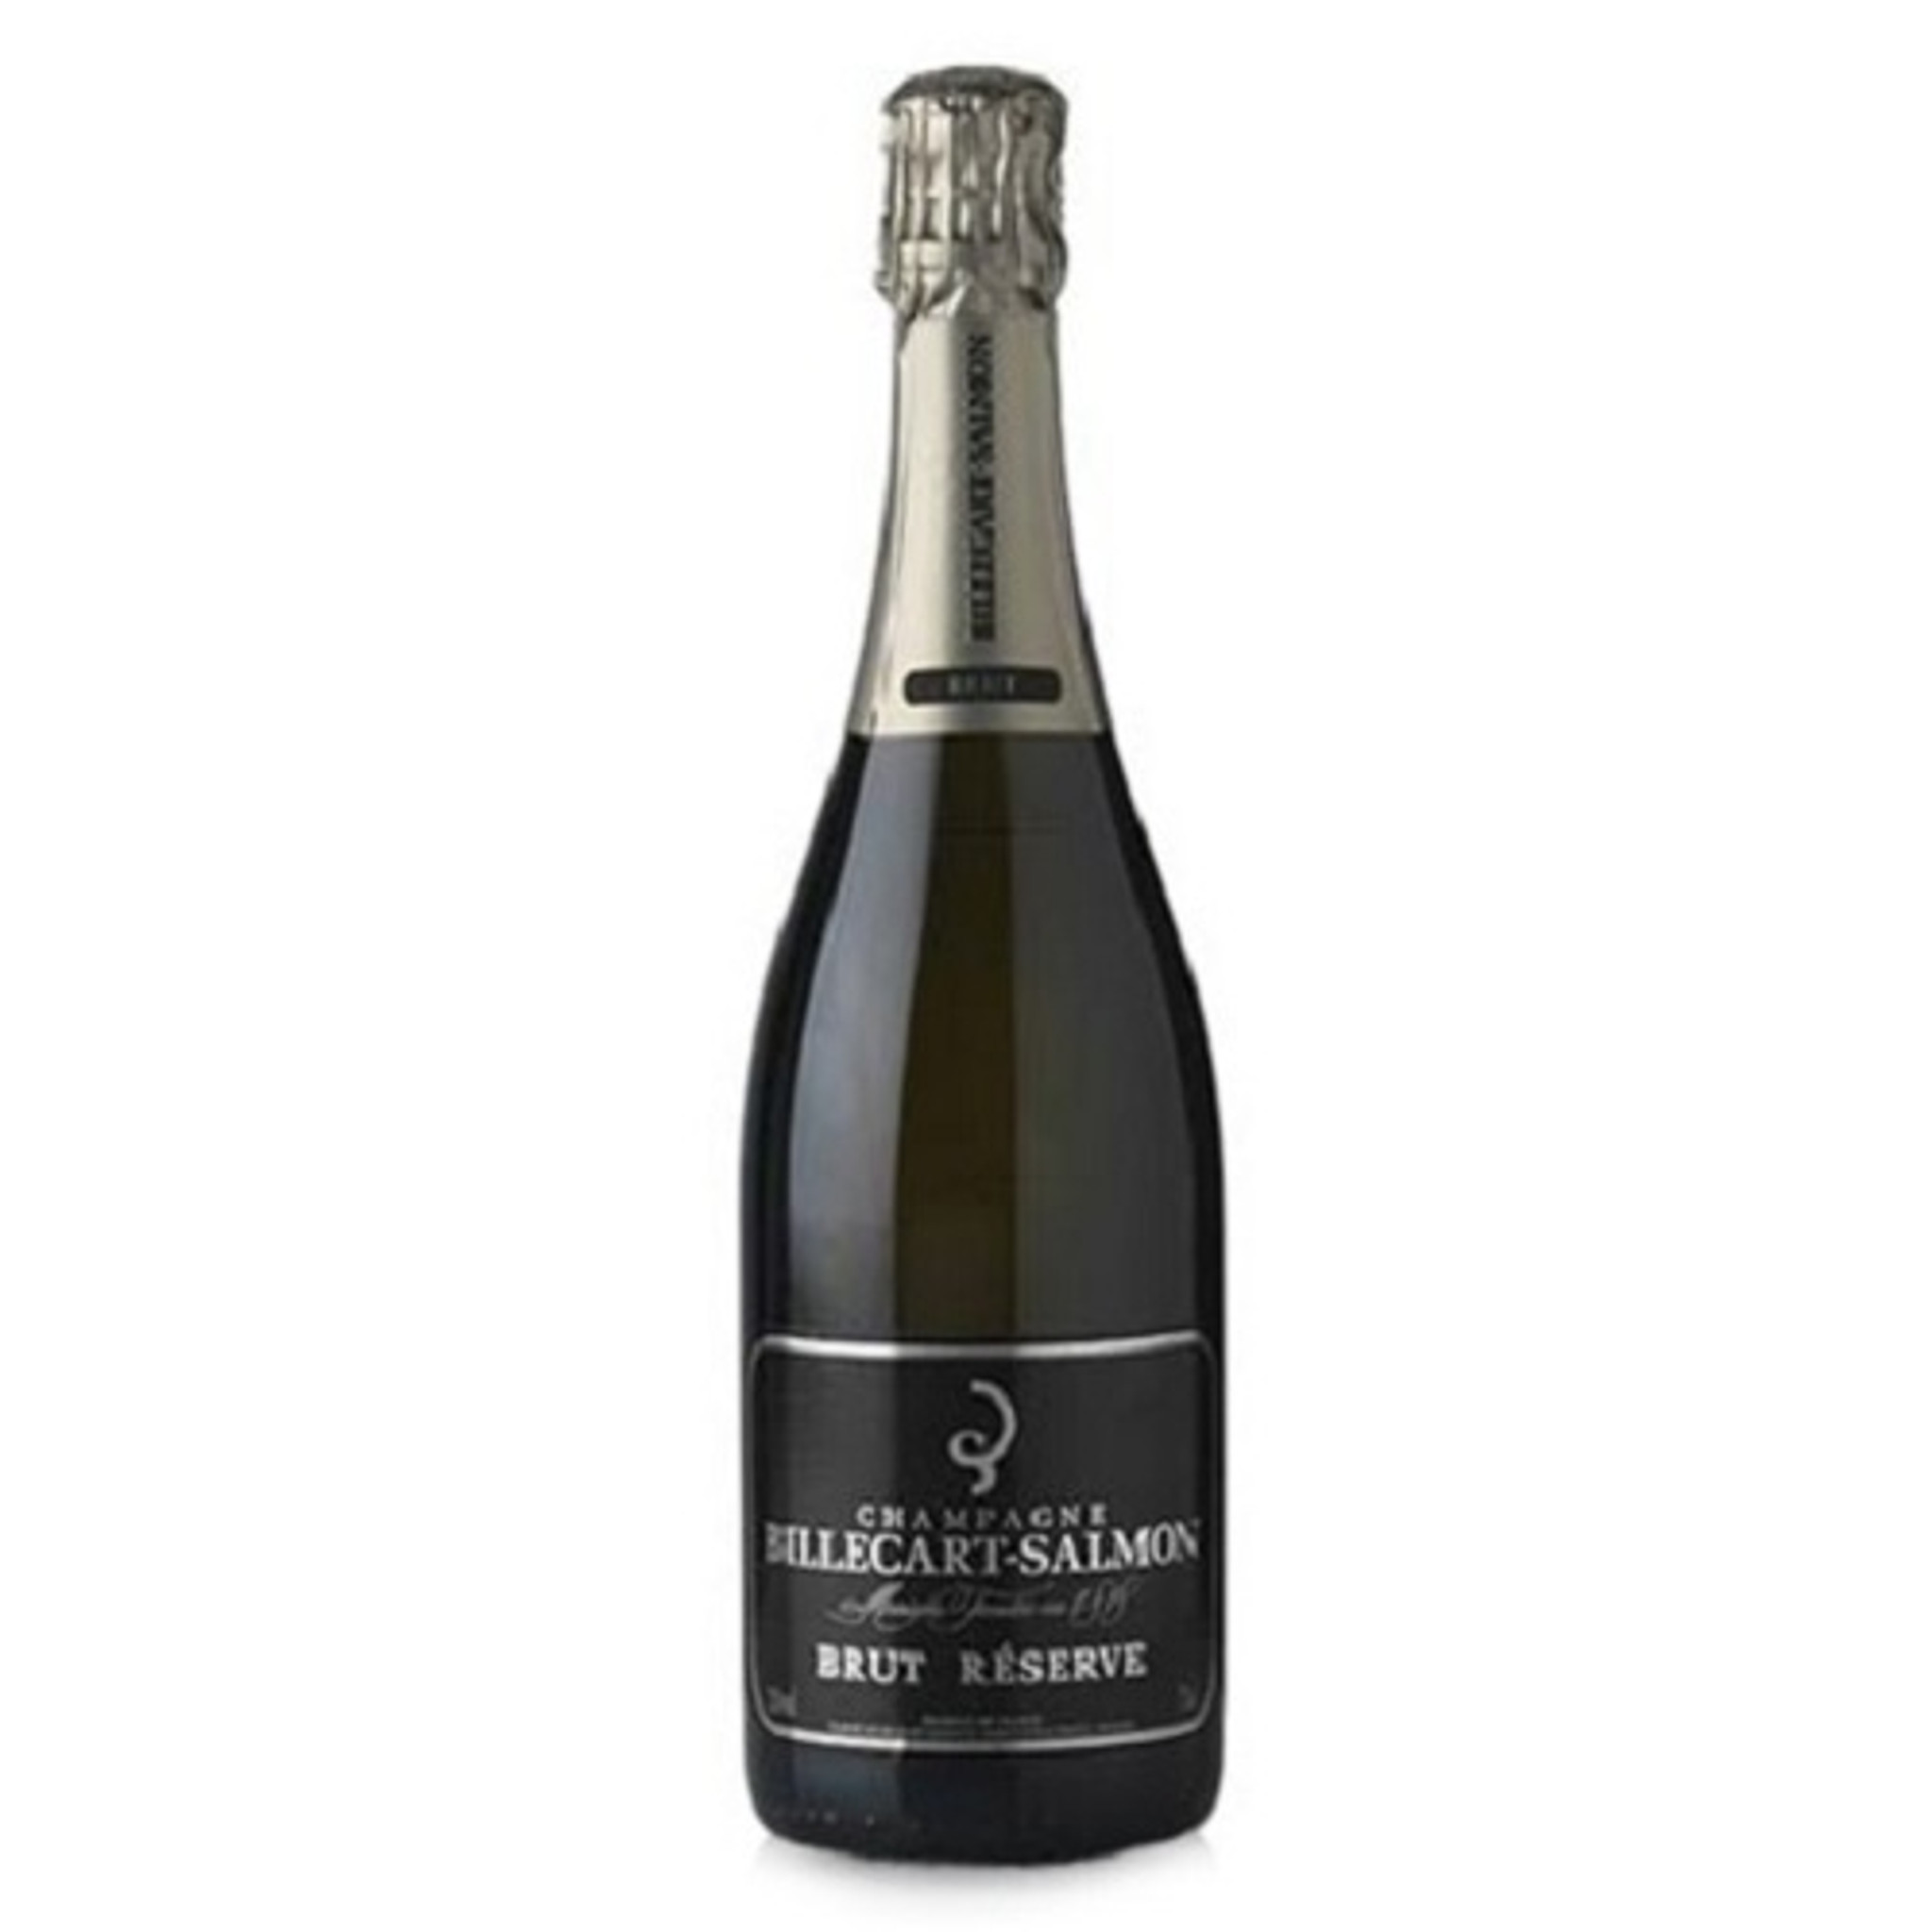 Billecart Salmon Brut Reserve Champagne 375ml (half bottle)